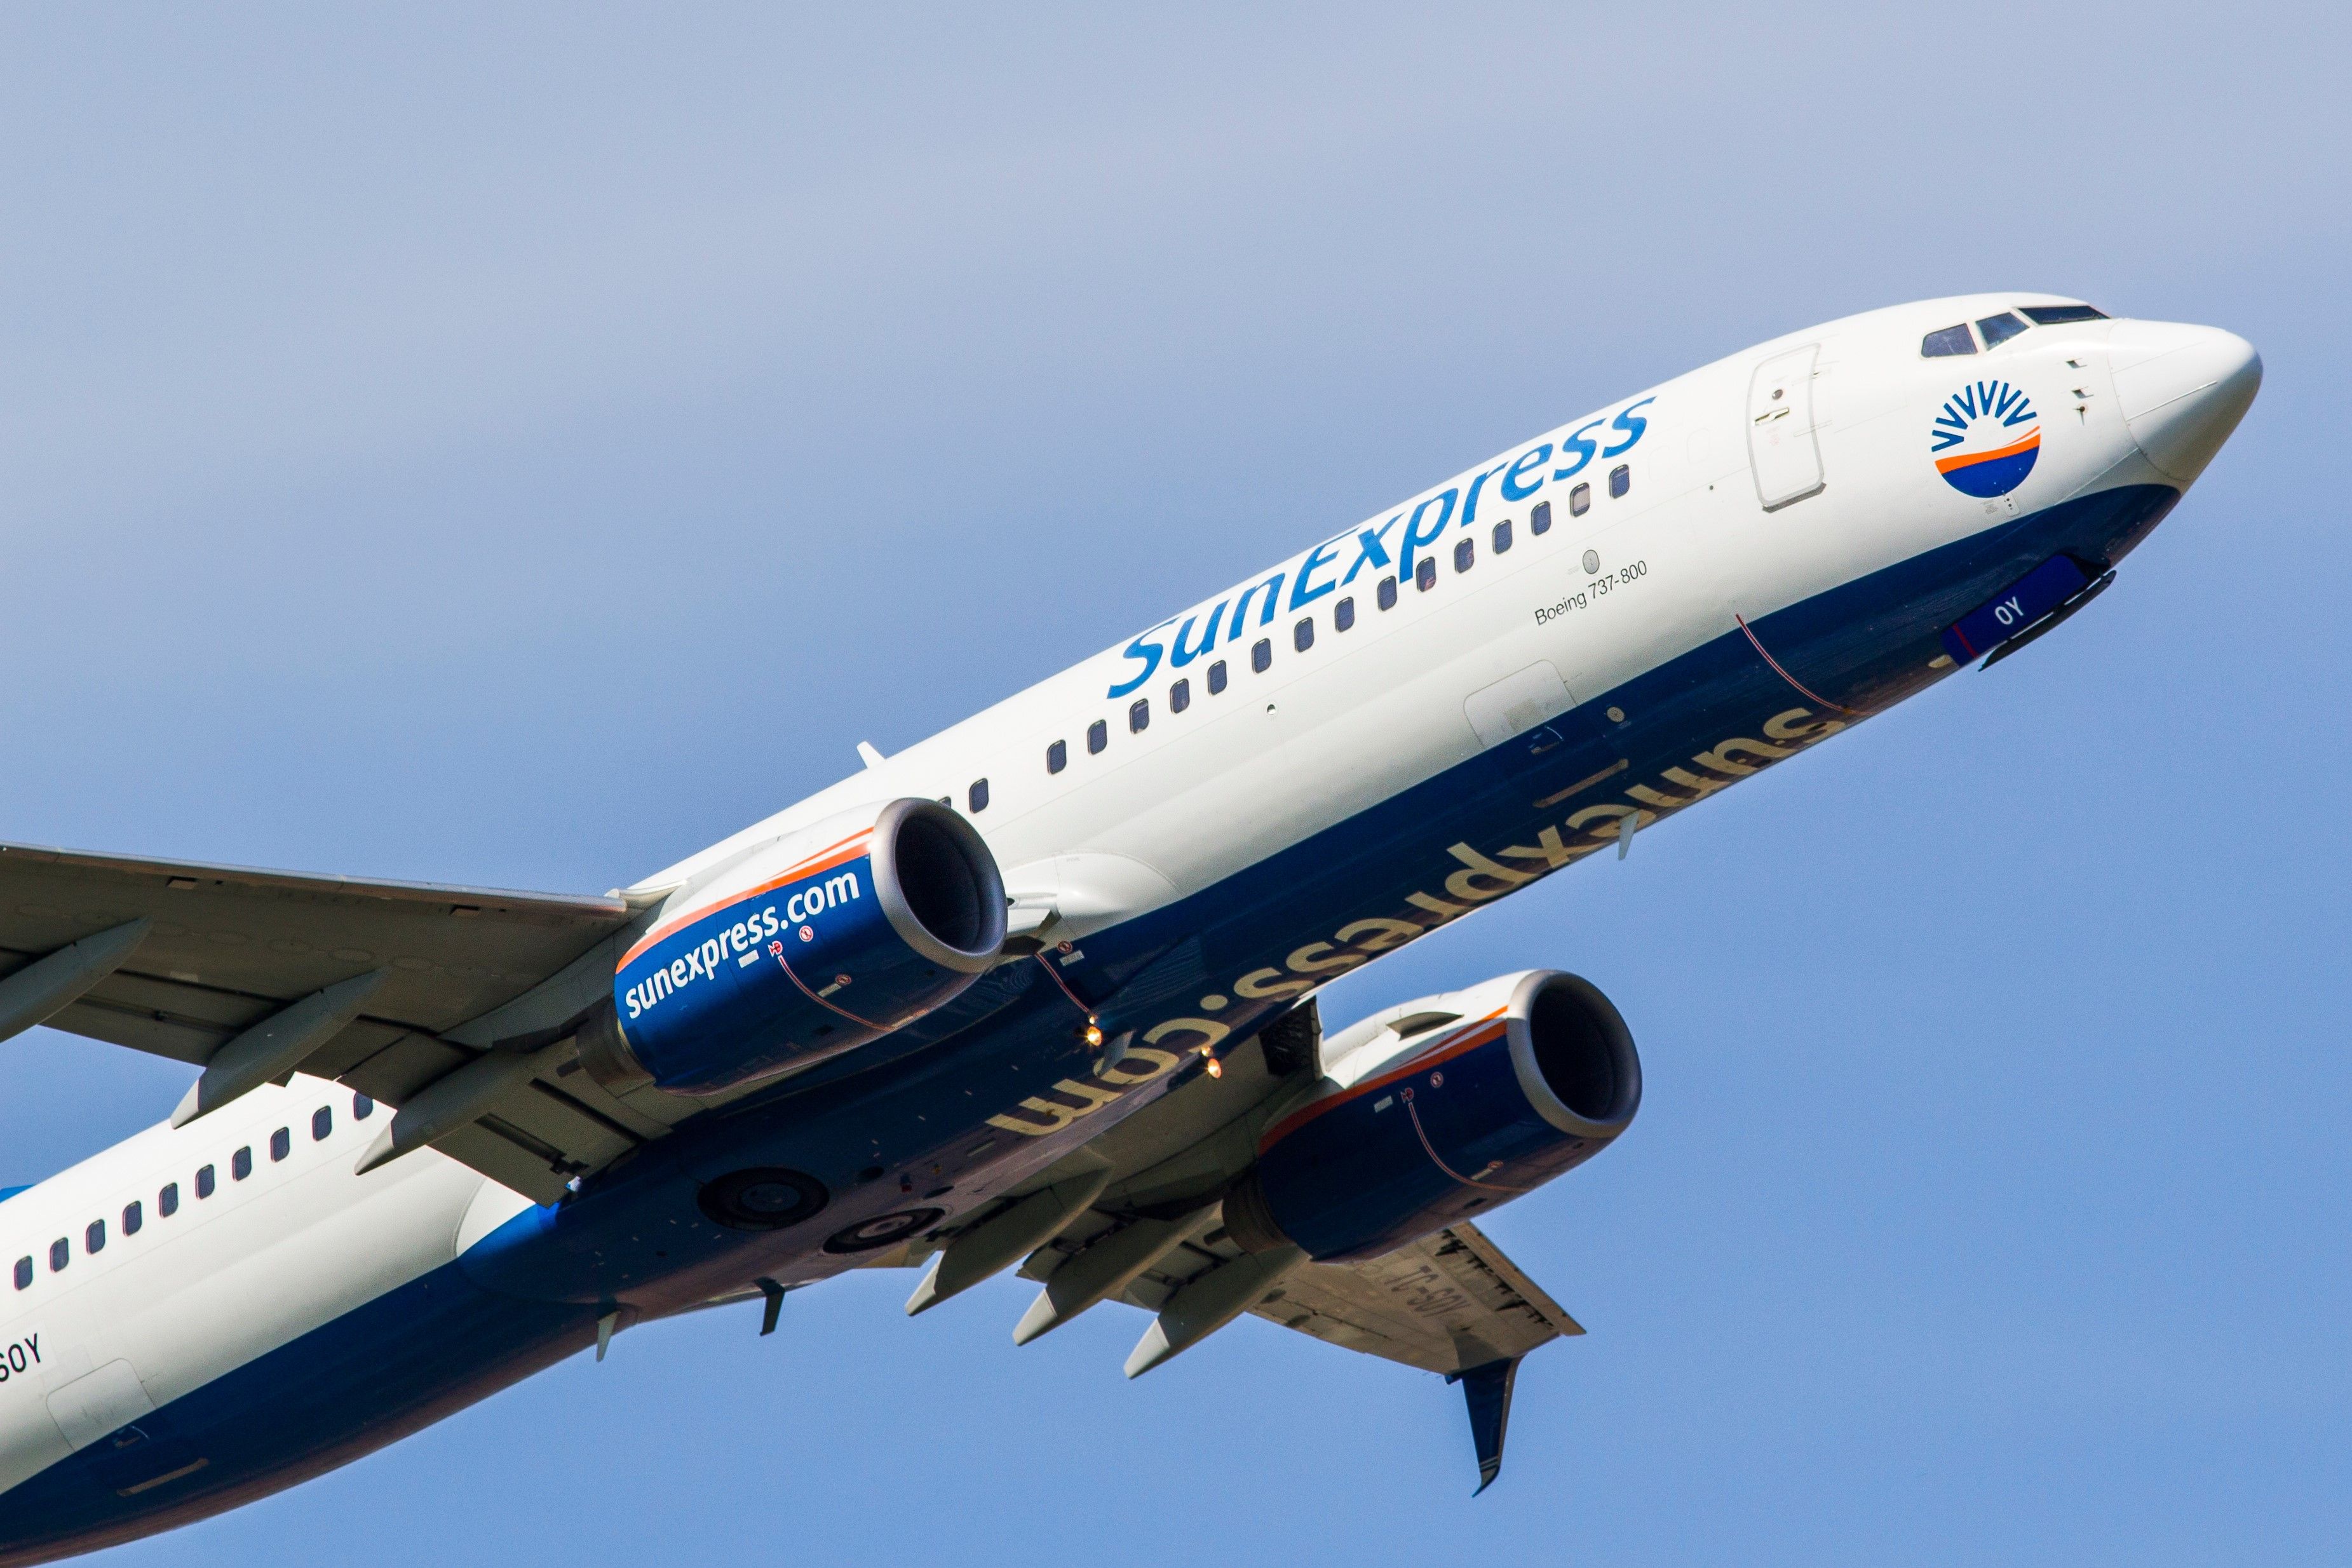 SunExpress Boeing 737-800 